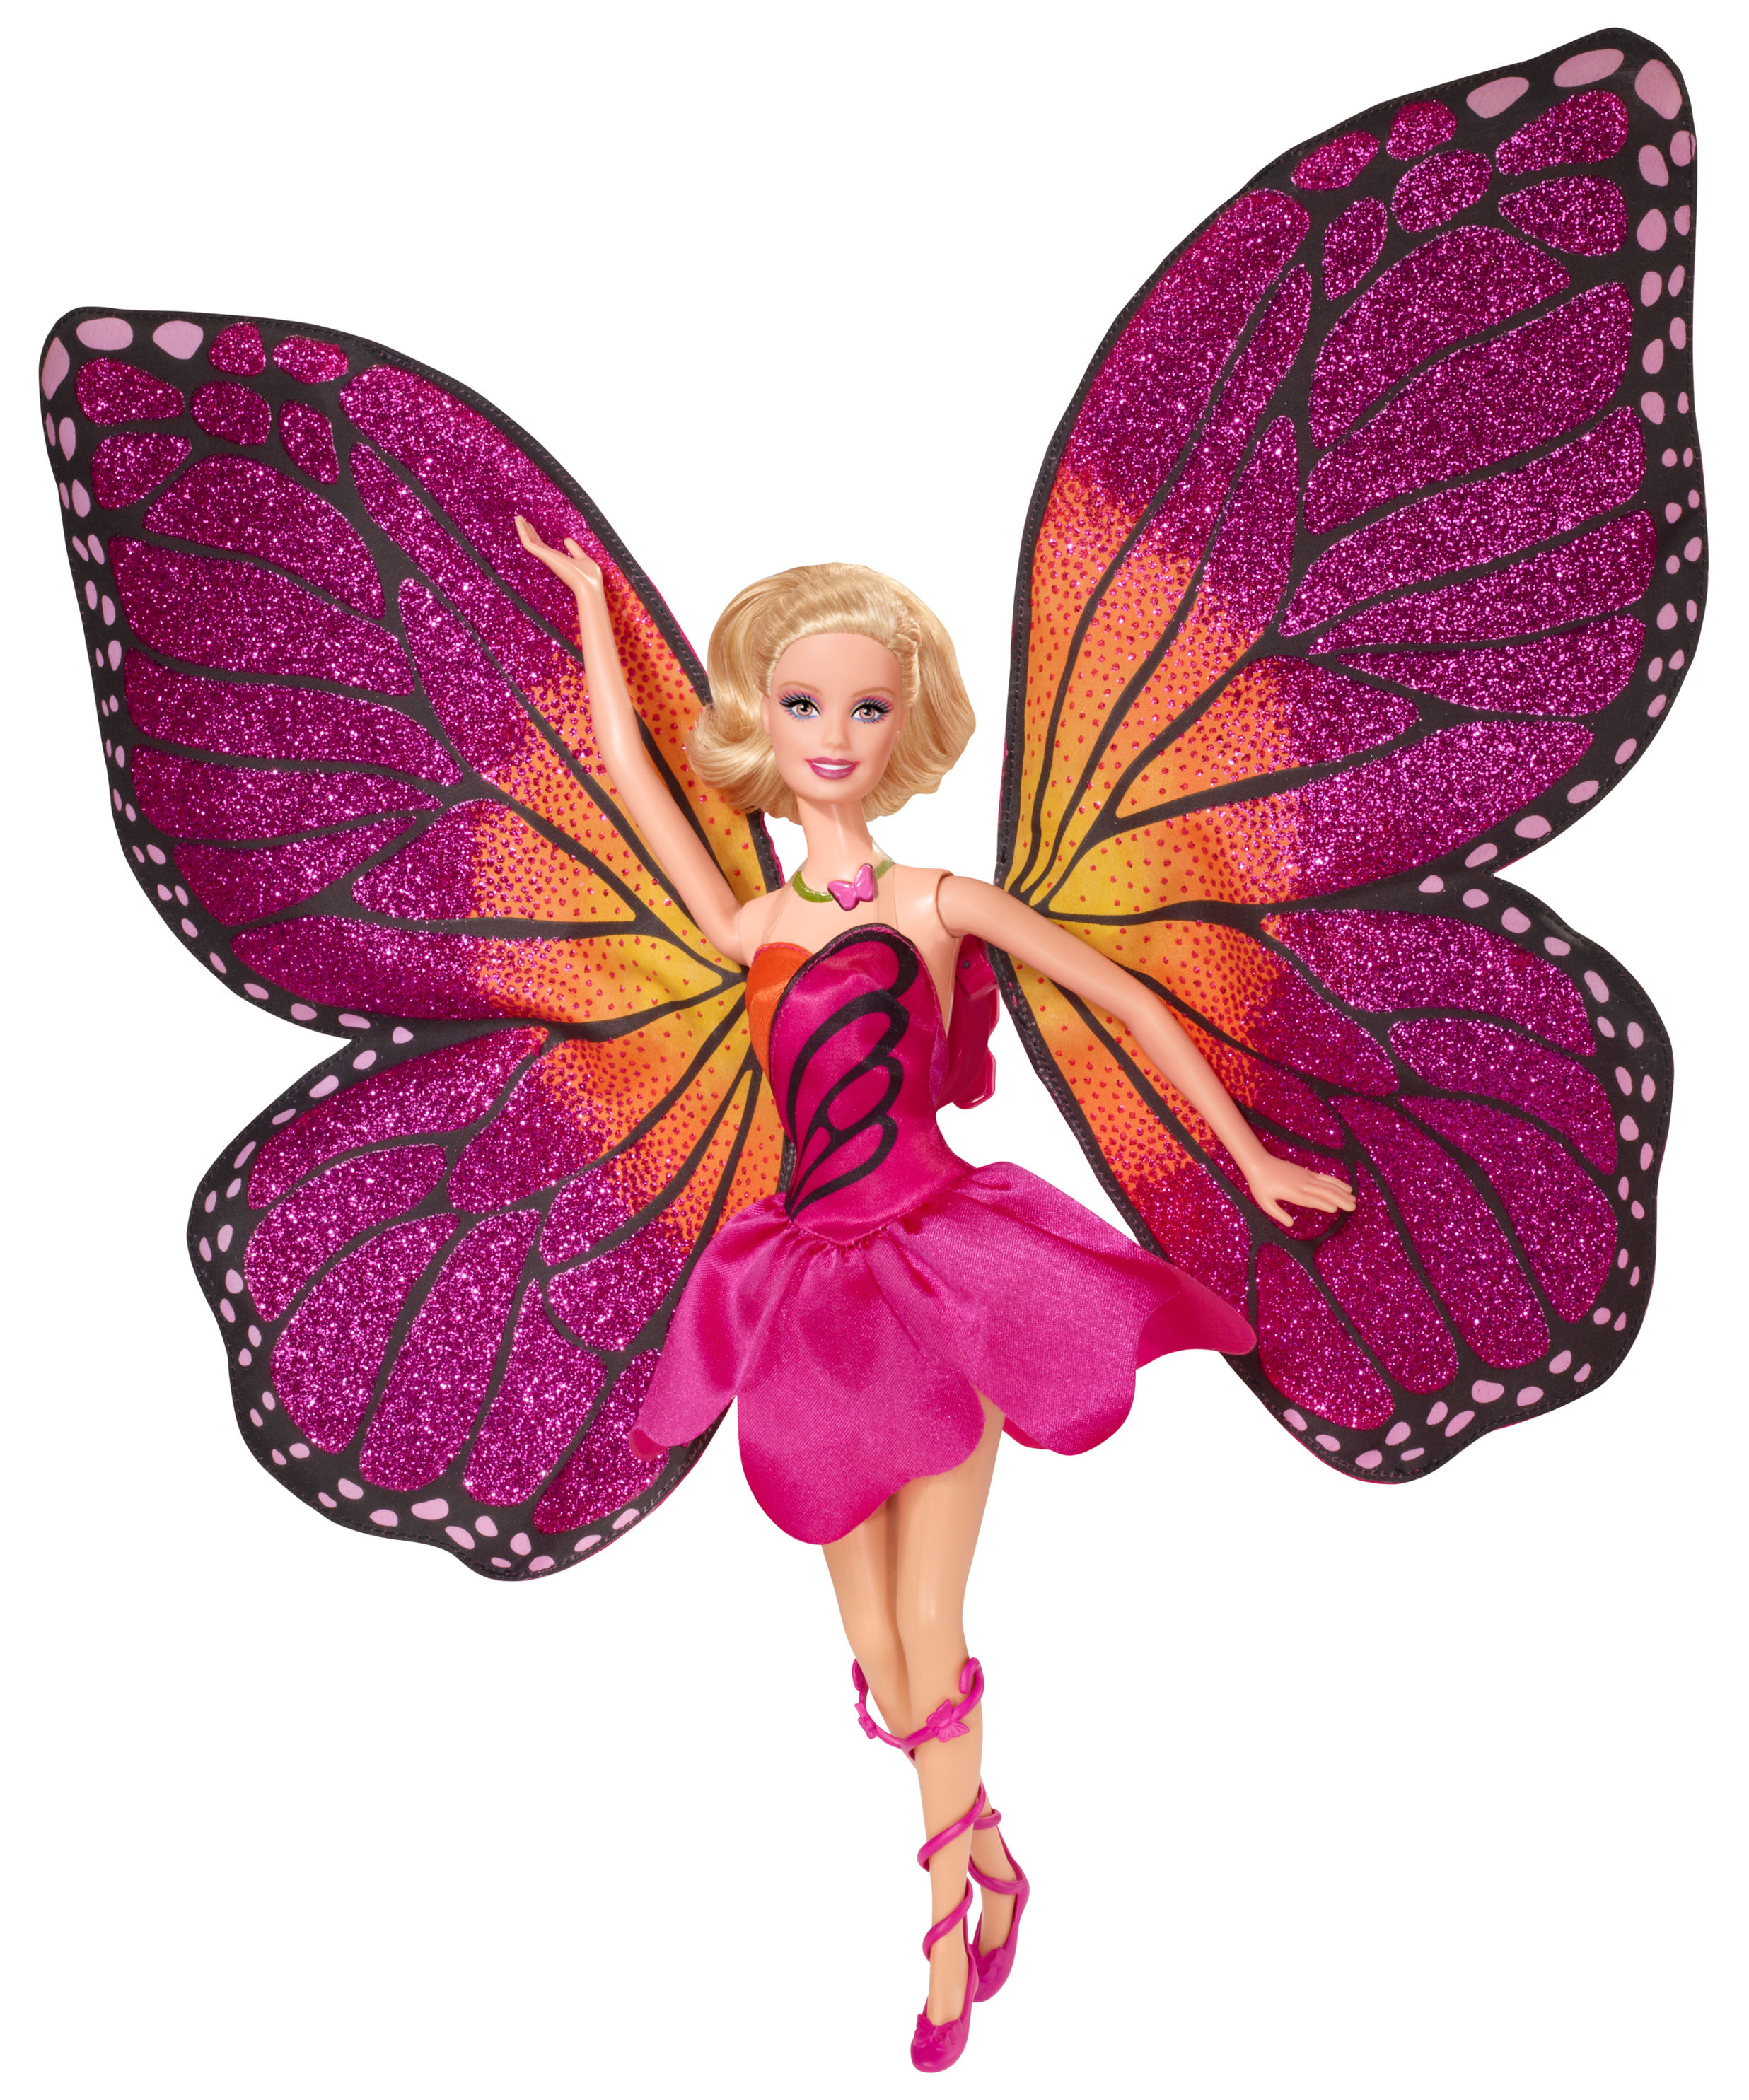 Barbie Mariposa jetzt bei Weltbild.de bestellen